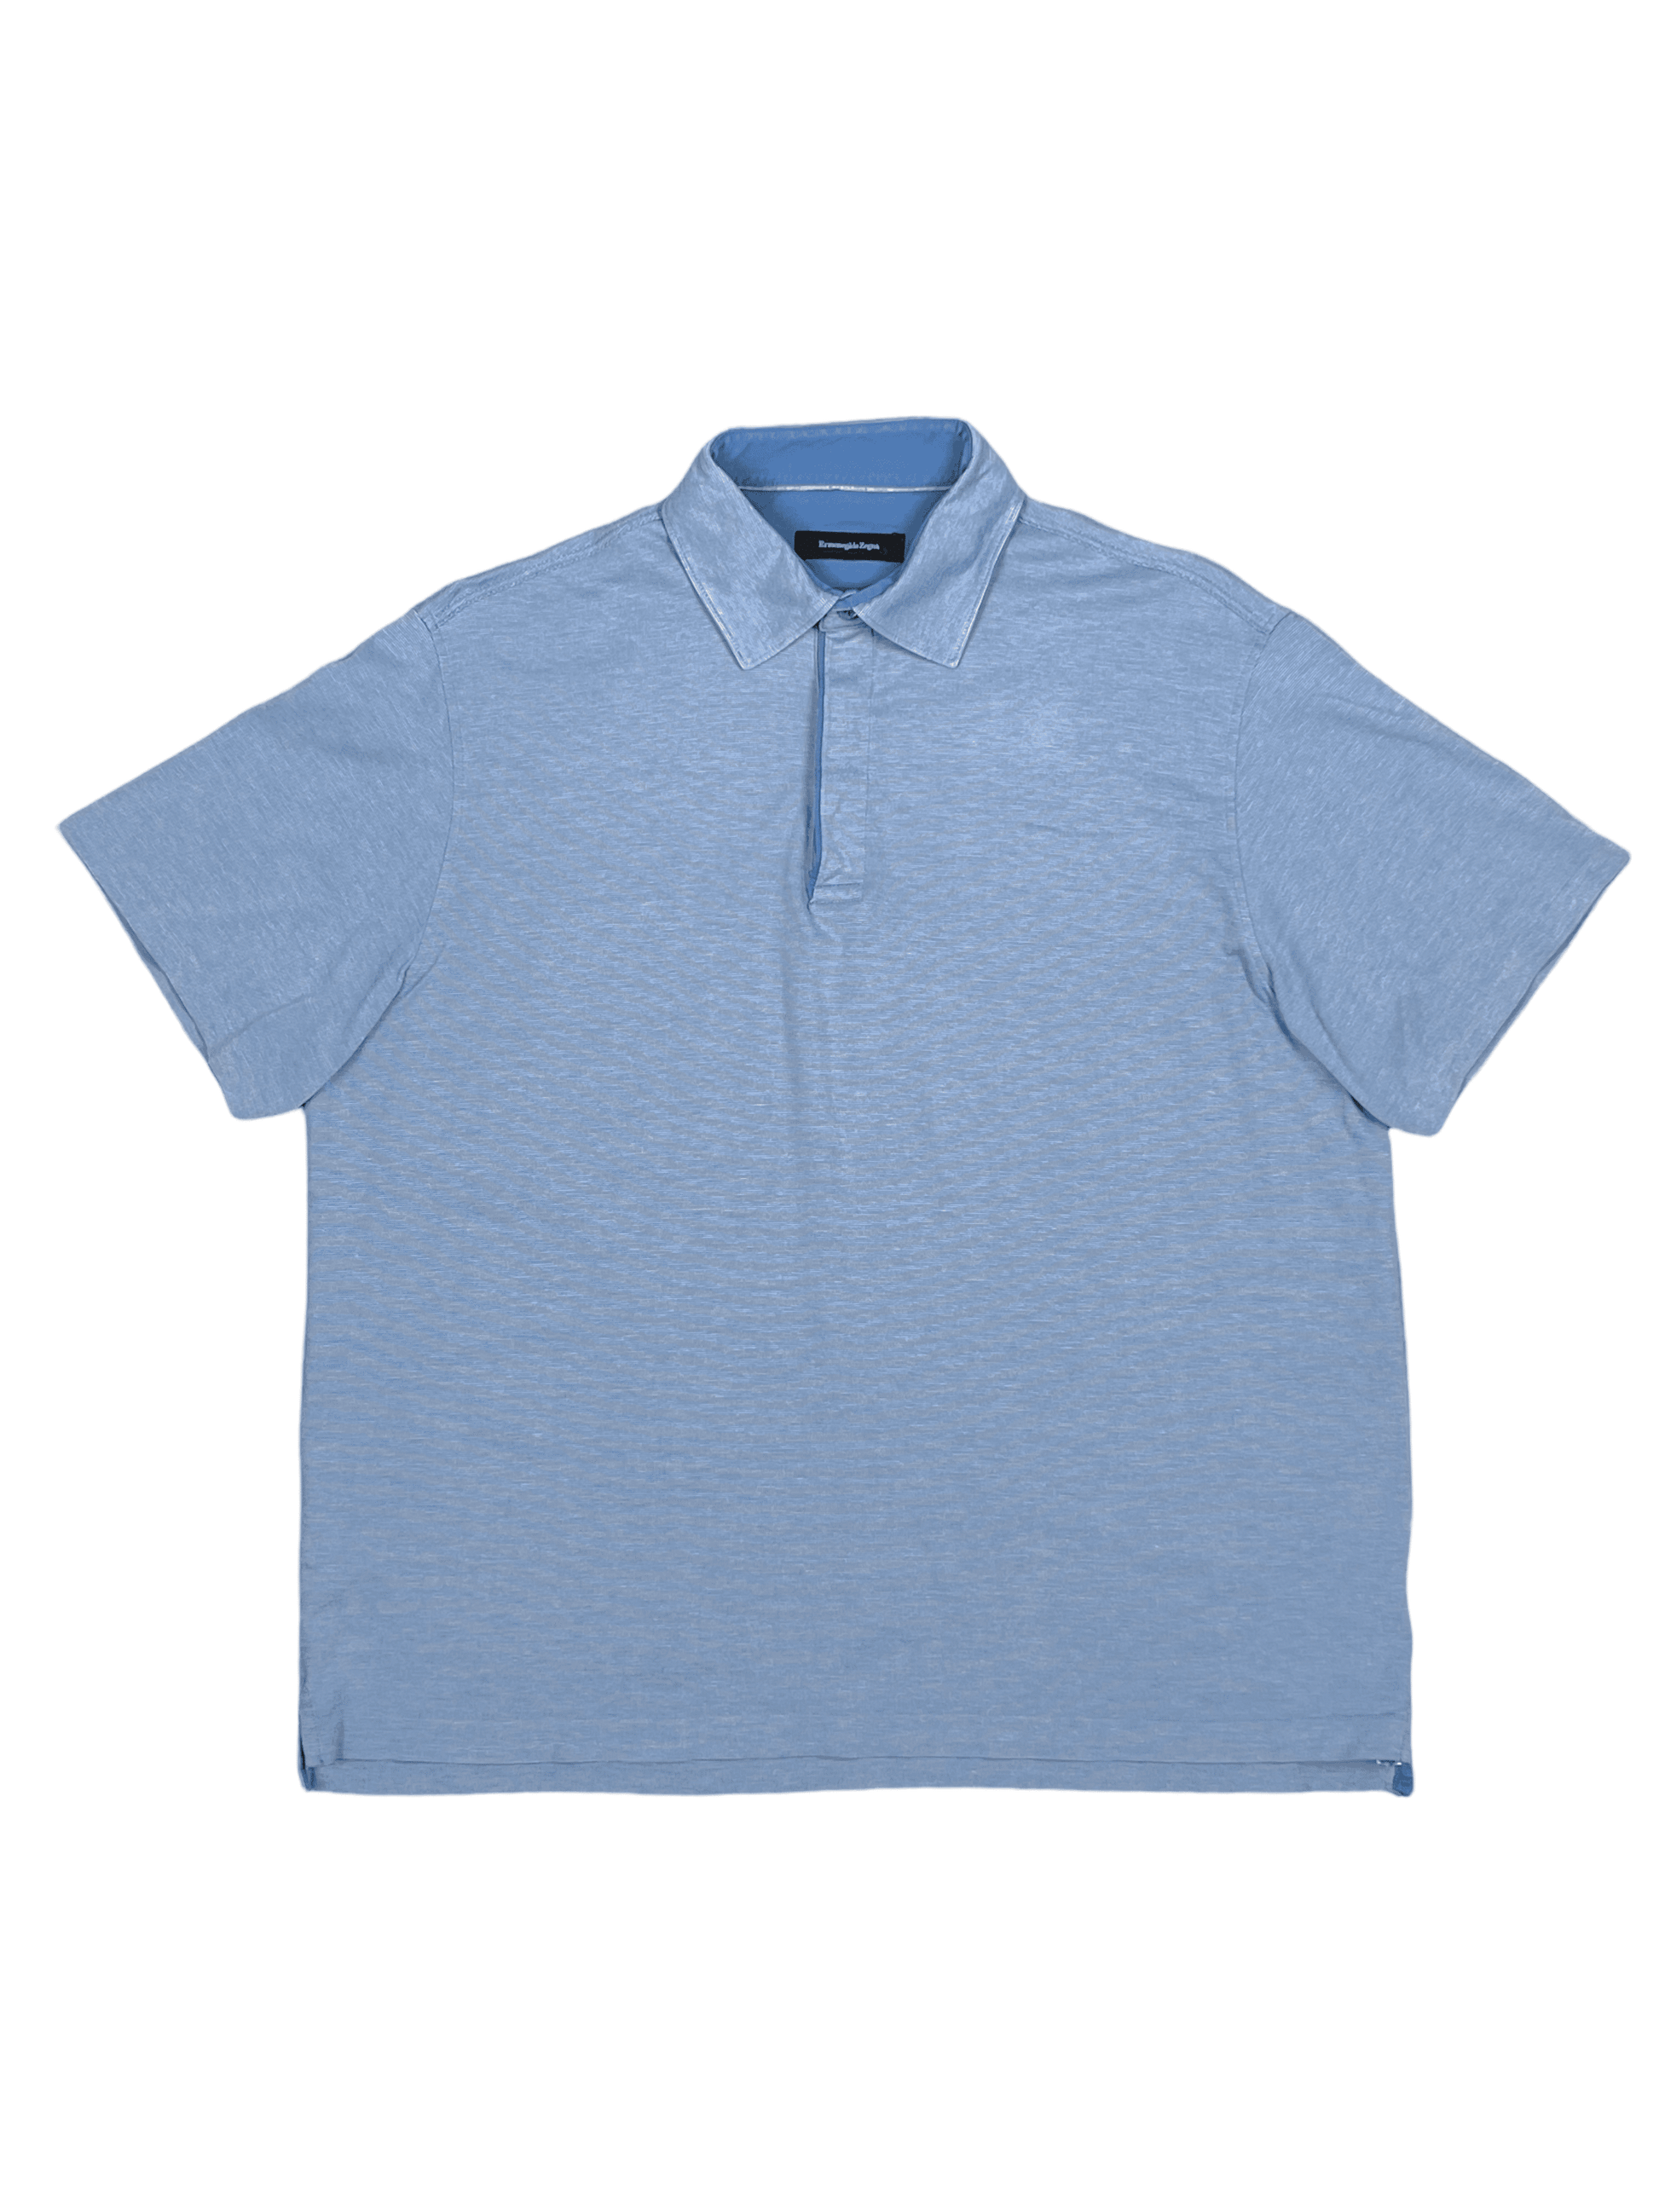 Ermenegildo Zegna Blue Cotton Polo Large - Genuine Design Luxury Consignment for Men. New & Pre-Owned Clothing, Shoes, & Accessories. Calgary, Canada